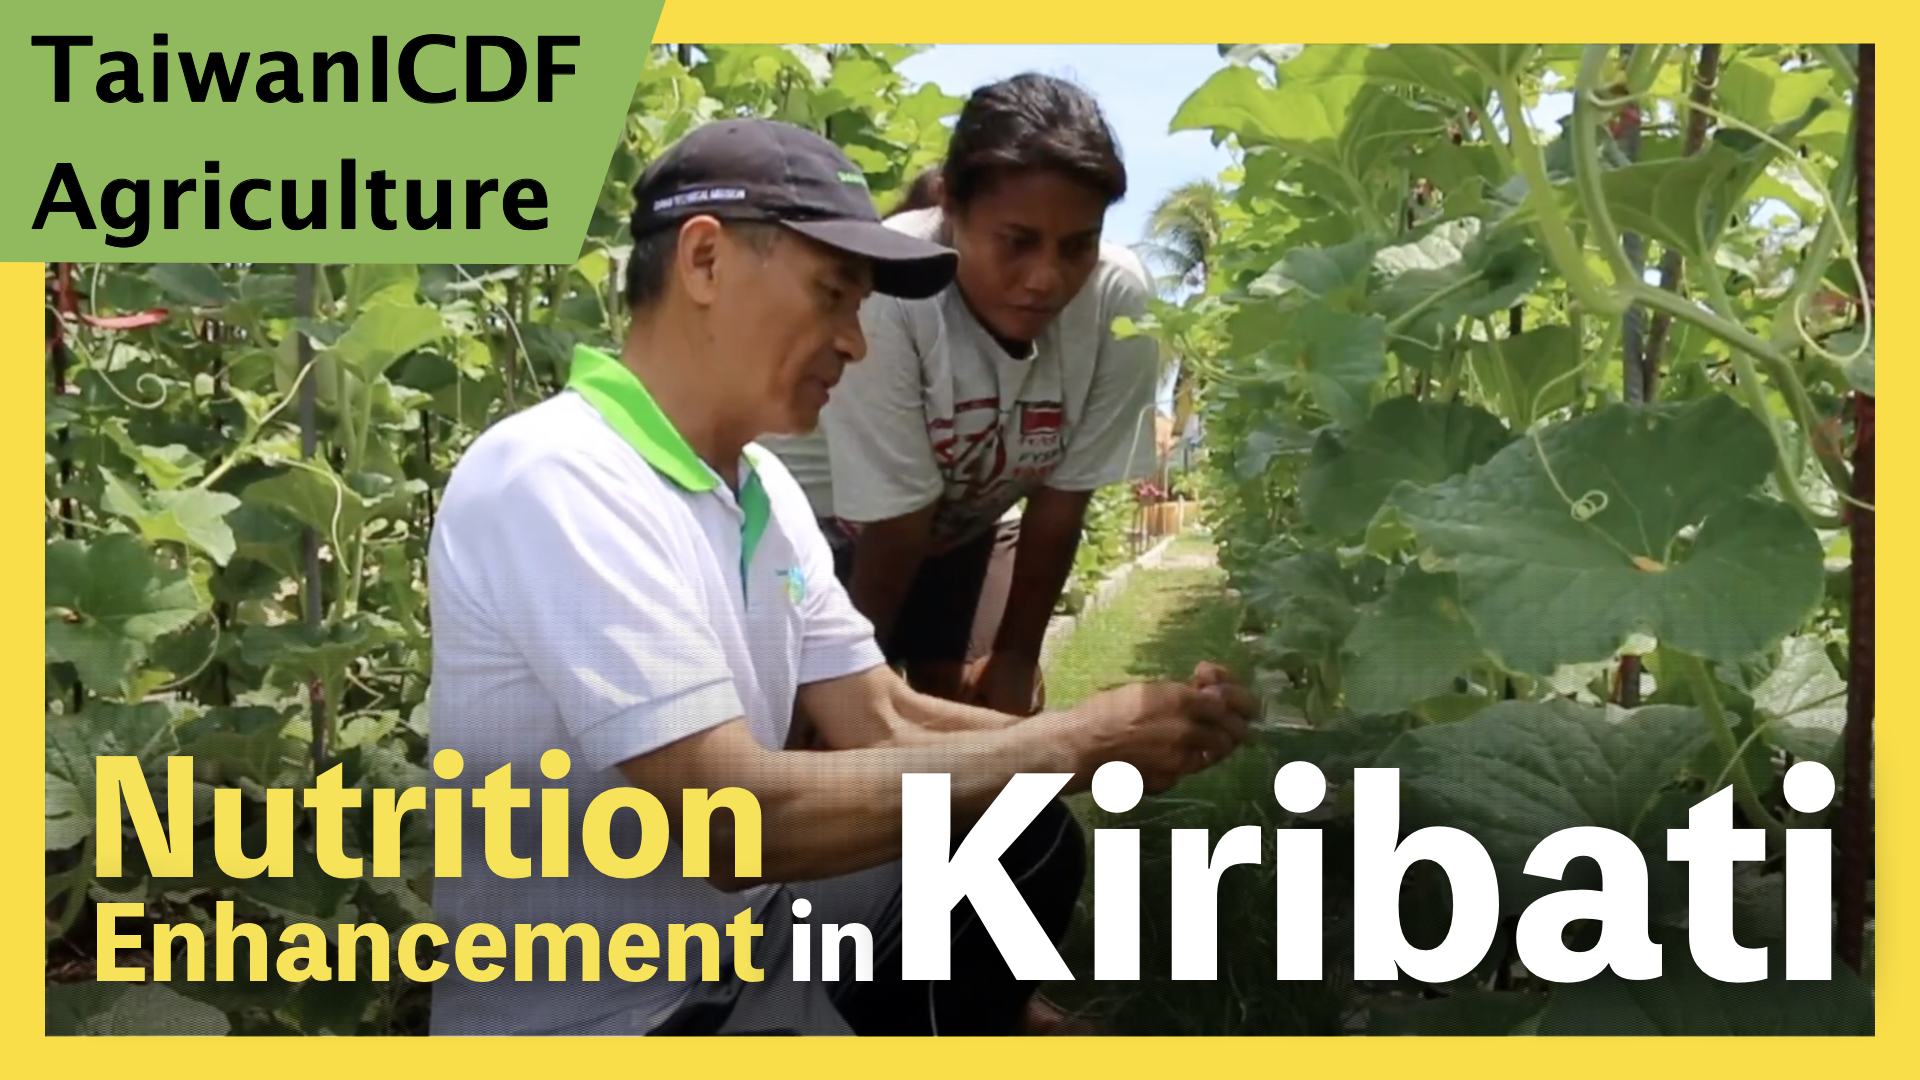 Nutrition Enhancement Project (Kiribati)